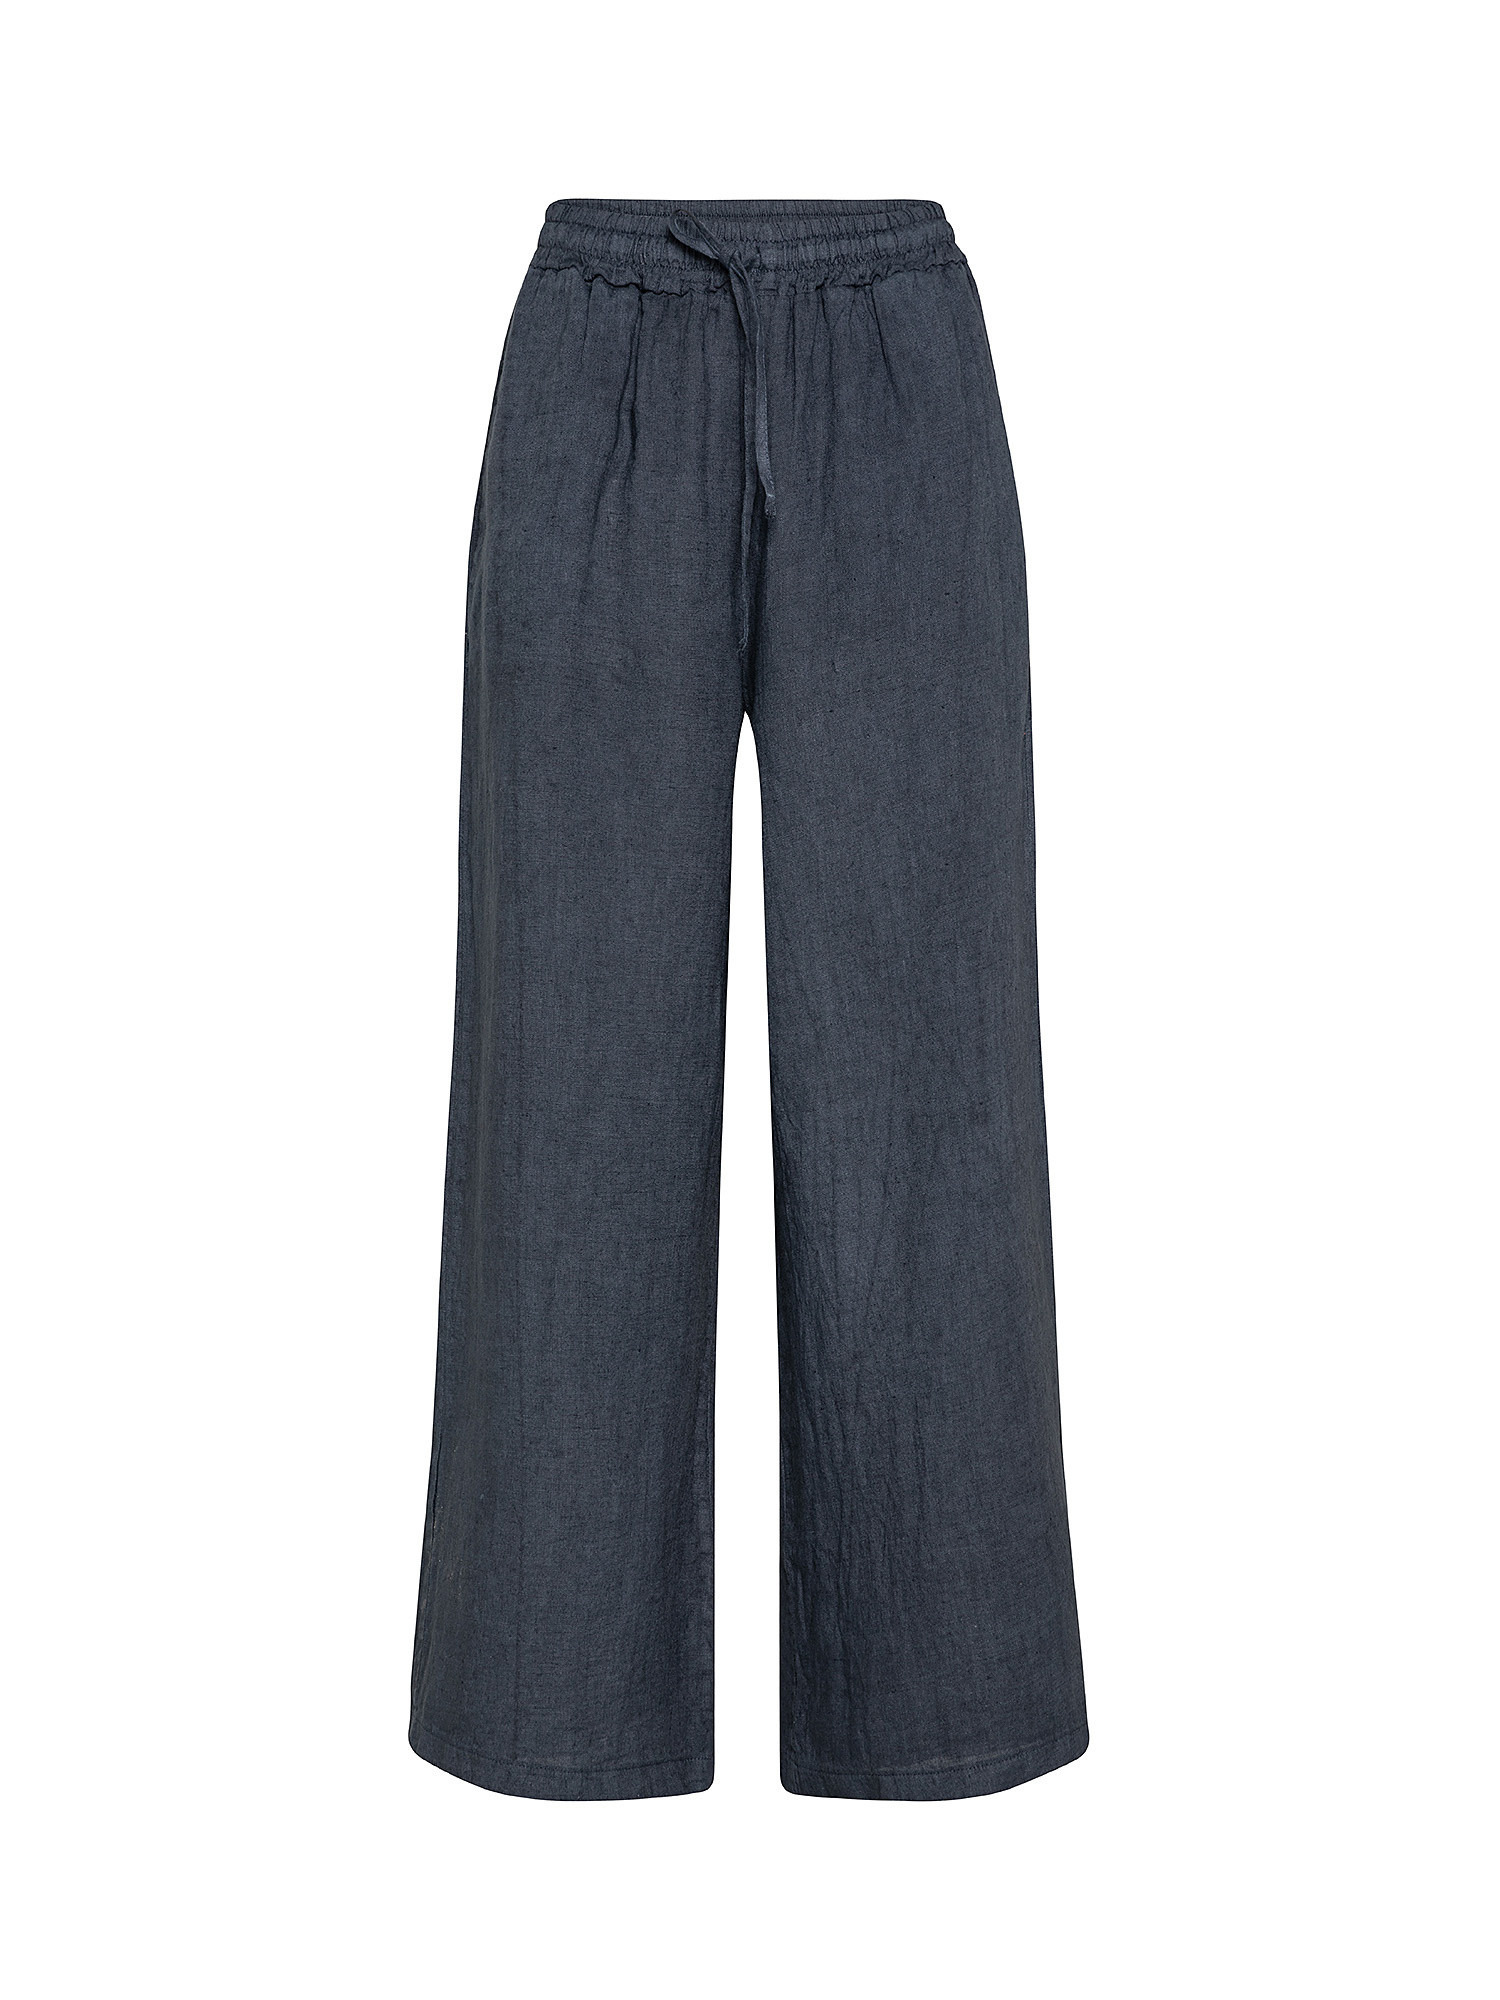 Pantalone ampio puro lino tinta unita, Blu, large image number 0